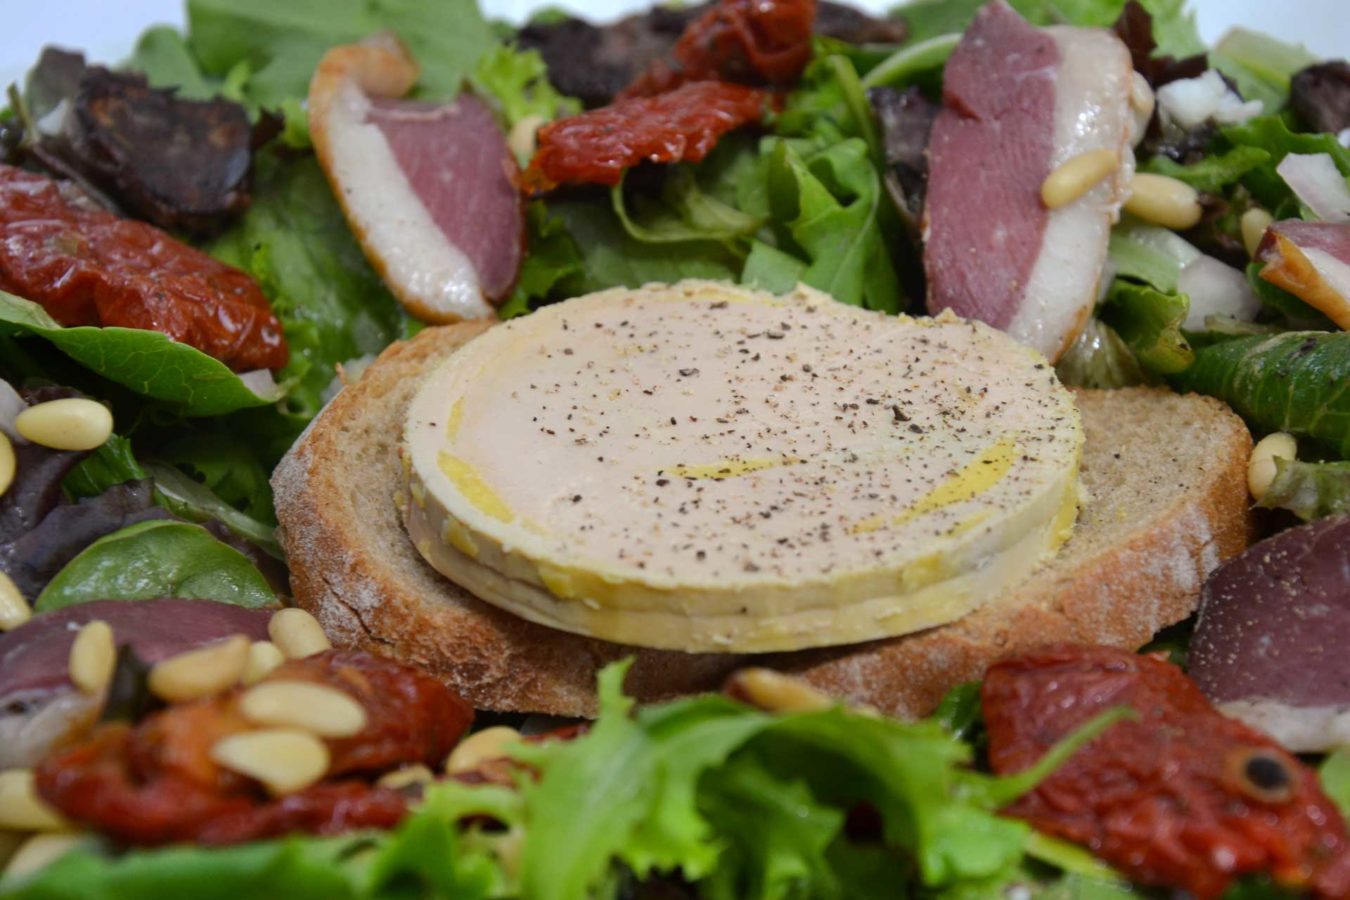 salade landaise